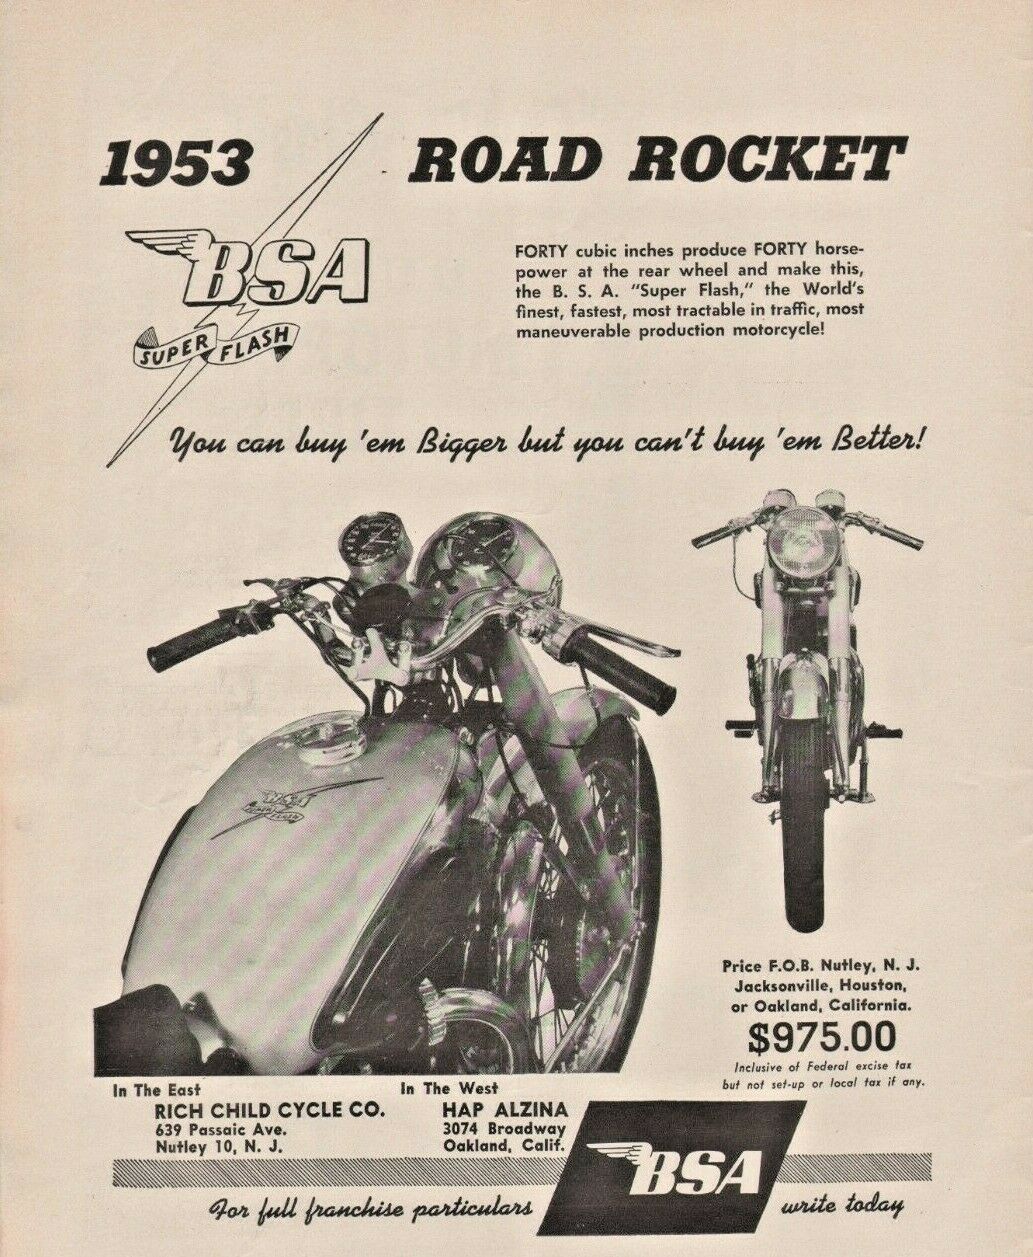 1953 Bsa Super Flash Road Rocket - Vintage Motorcycle Ad